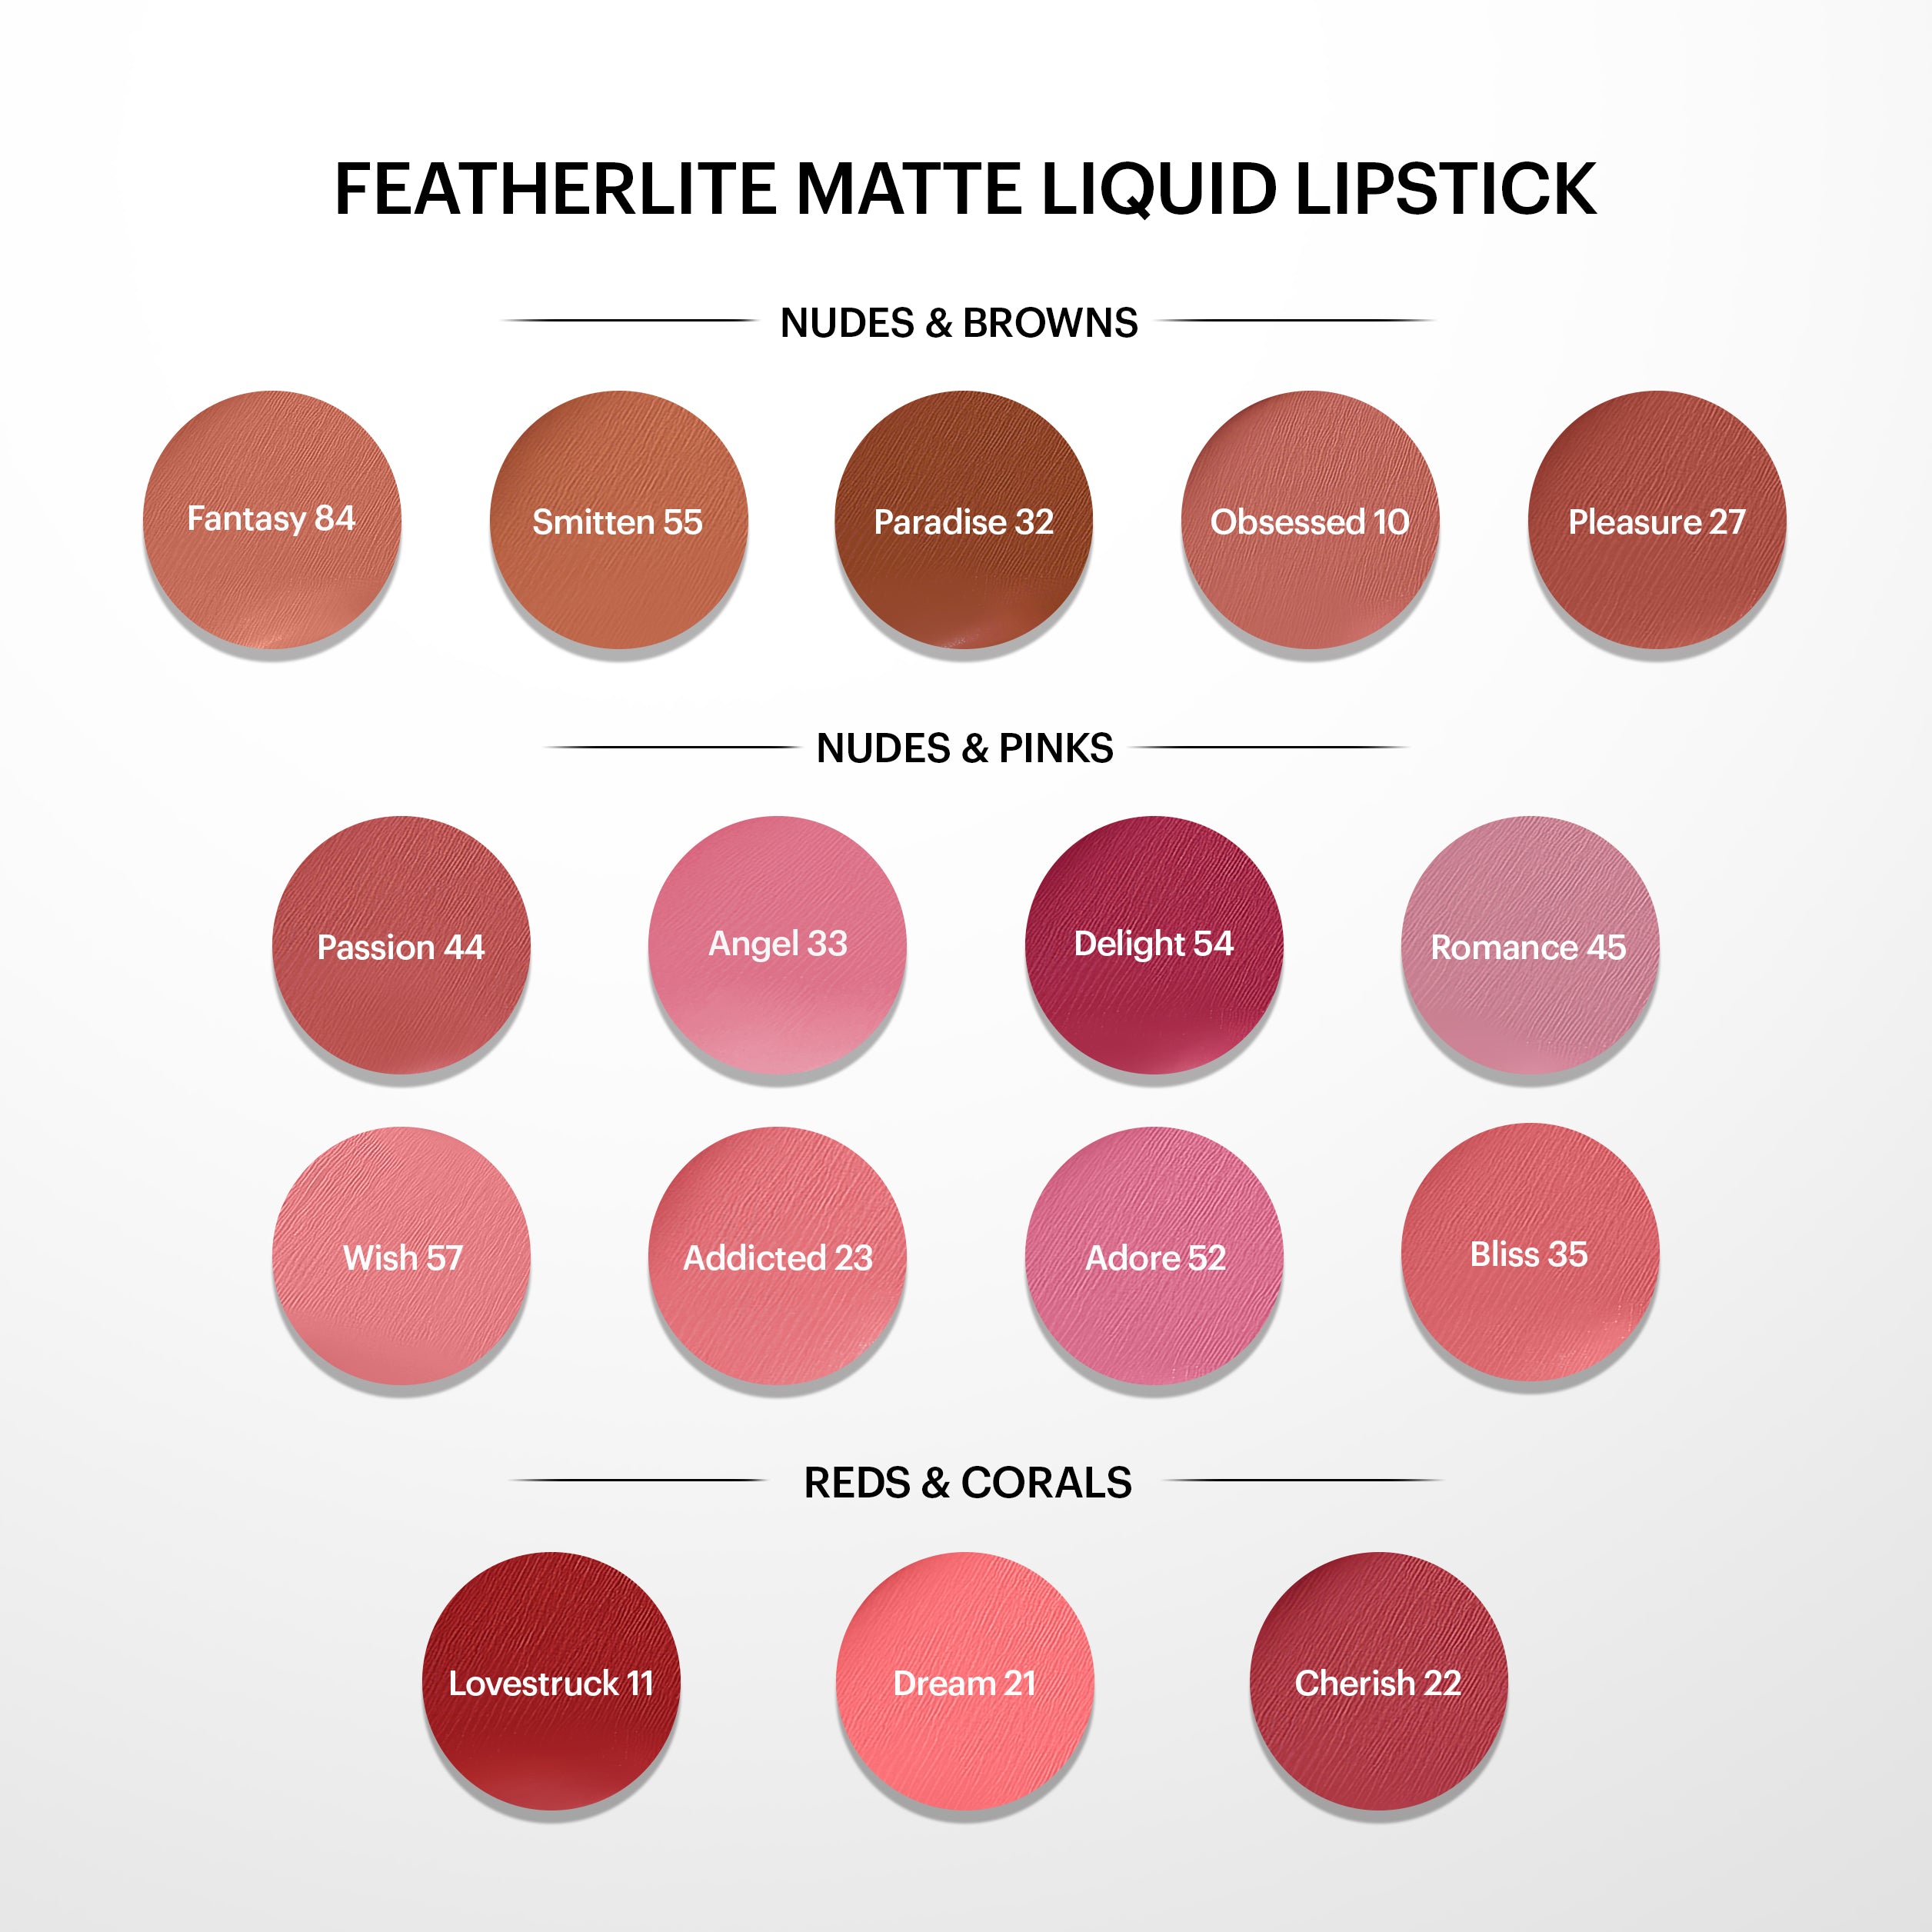 Featherlite Matte Liquid Lipstick: Passion 44